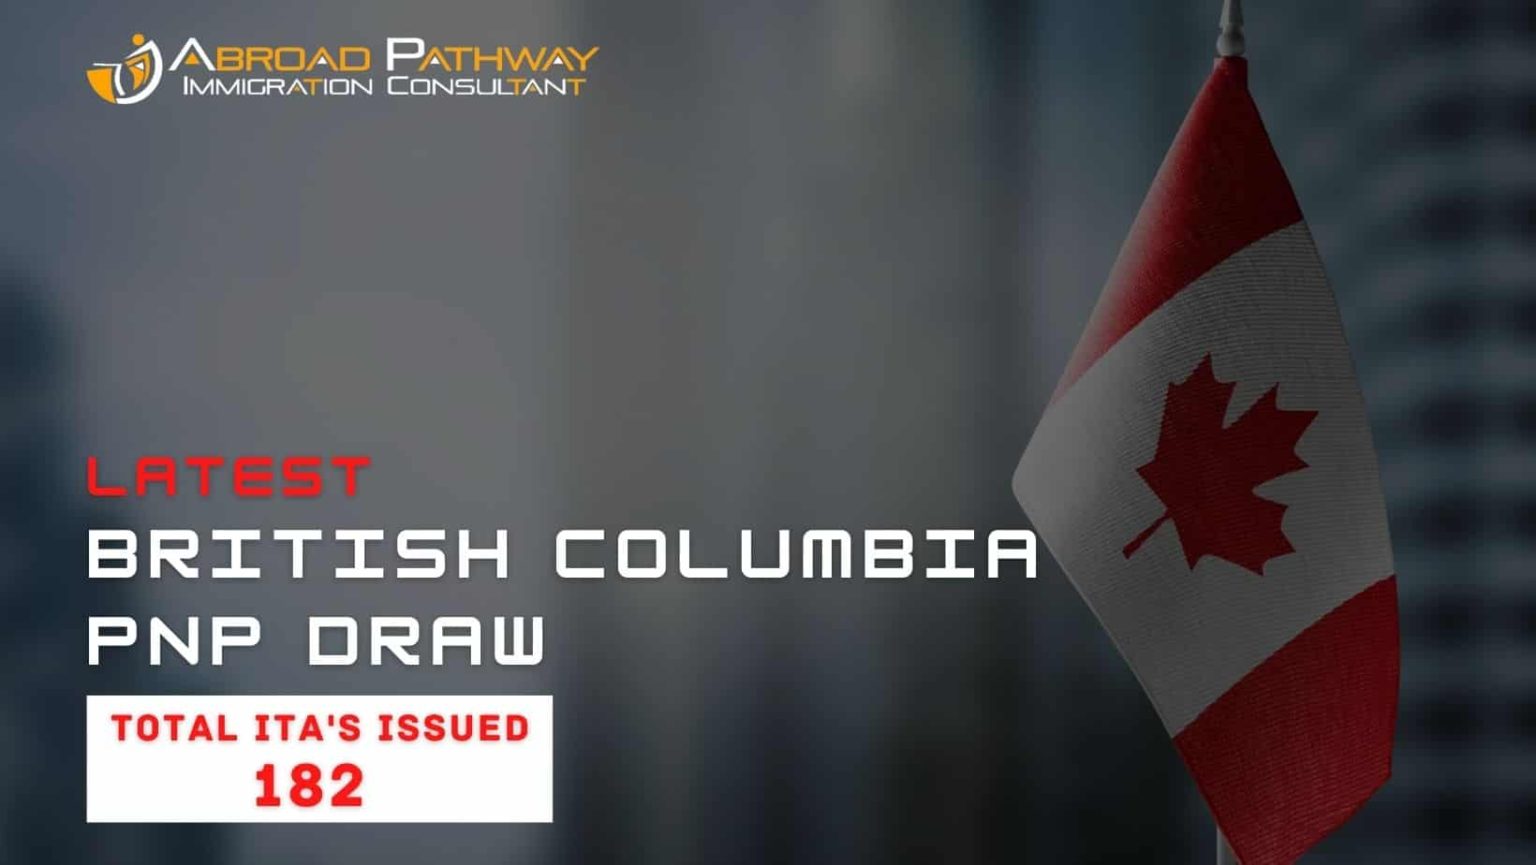 British Columbia PNP held its New draw on 28 June 2022